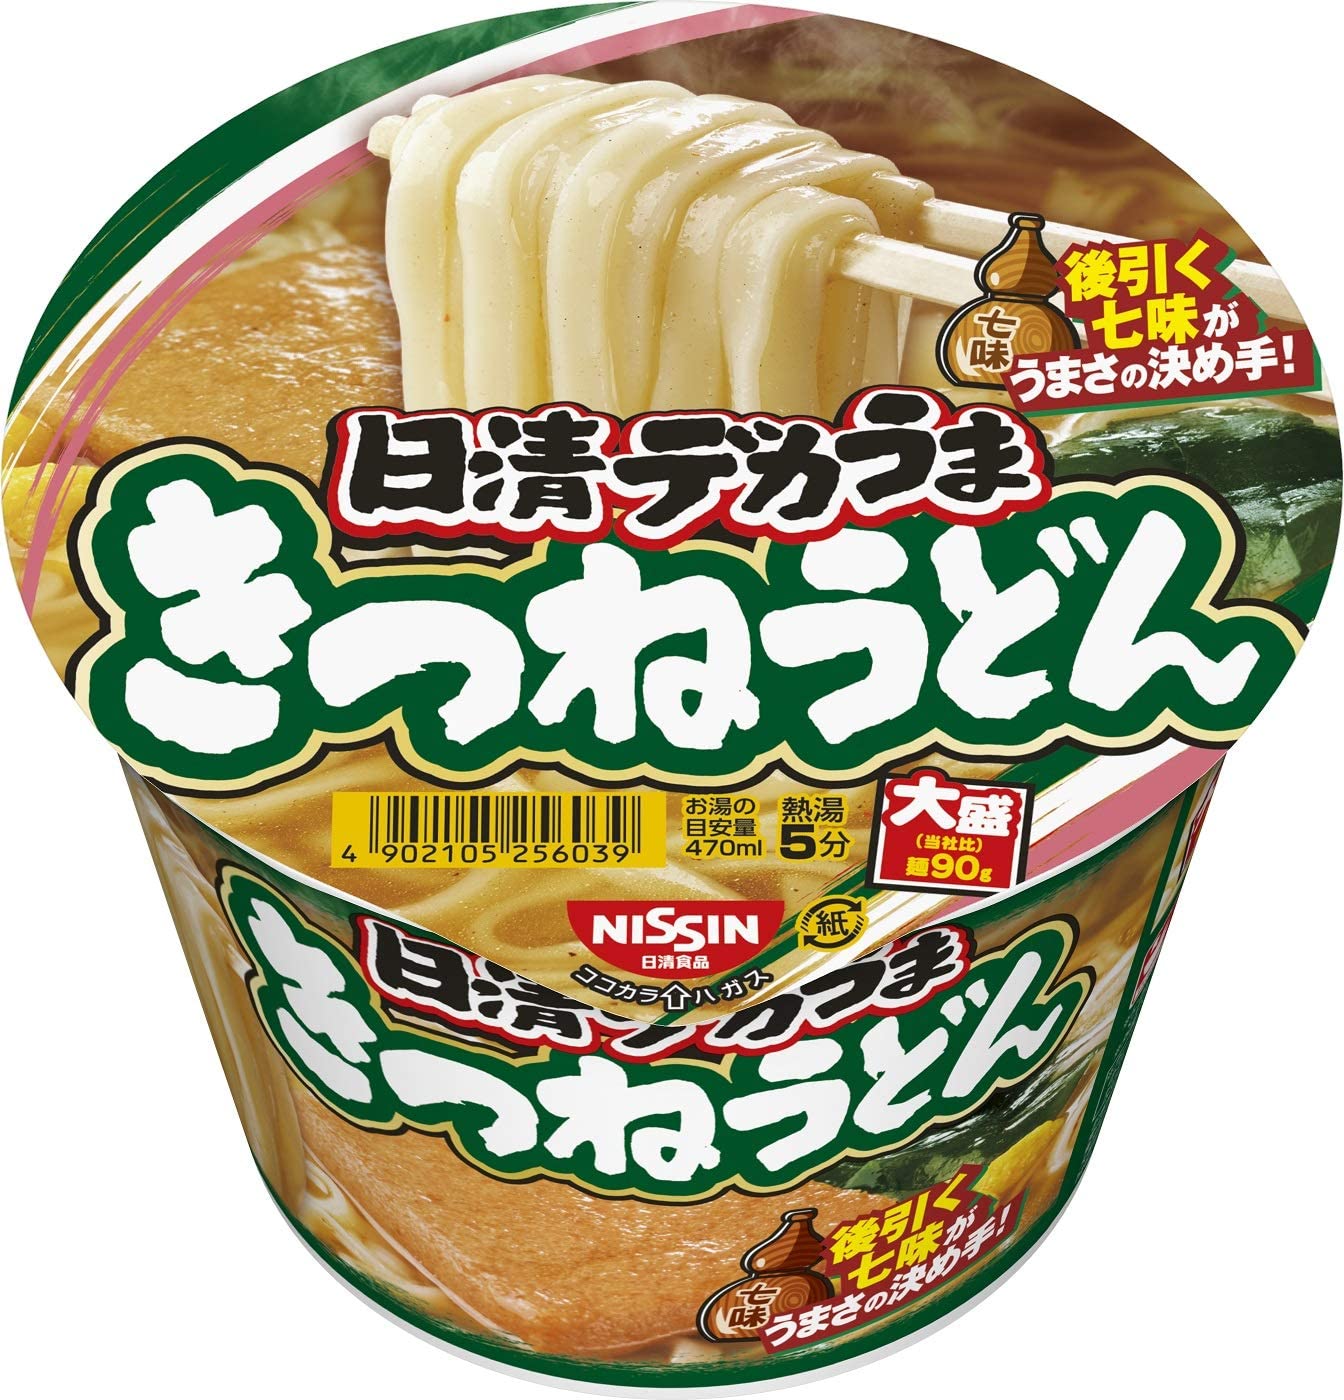 NISSIN Noodles Udon Kitsune Fried Tofu Soy Sauce Instant Soup Cup Japanese 106g